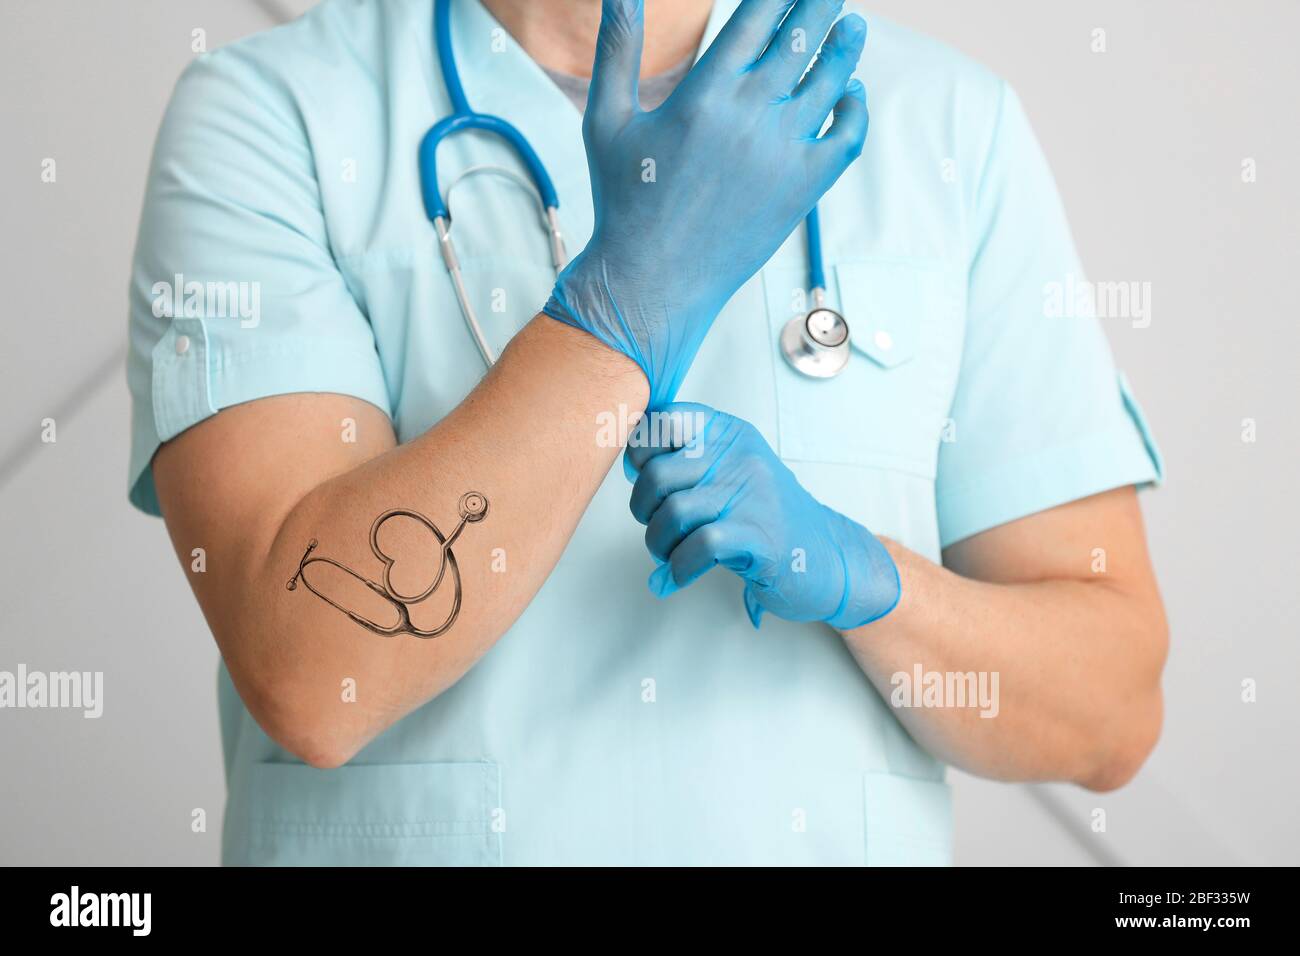 Female Doctor Tattoo Stethoscope On Arm Stock Photo 1671905365   Shutterstock